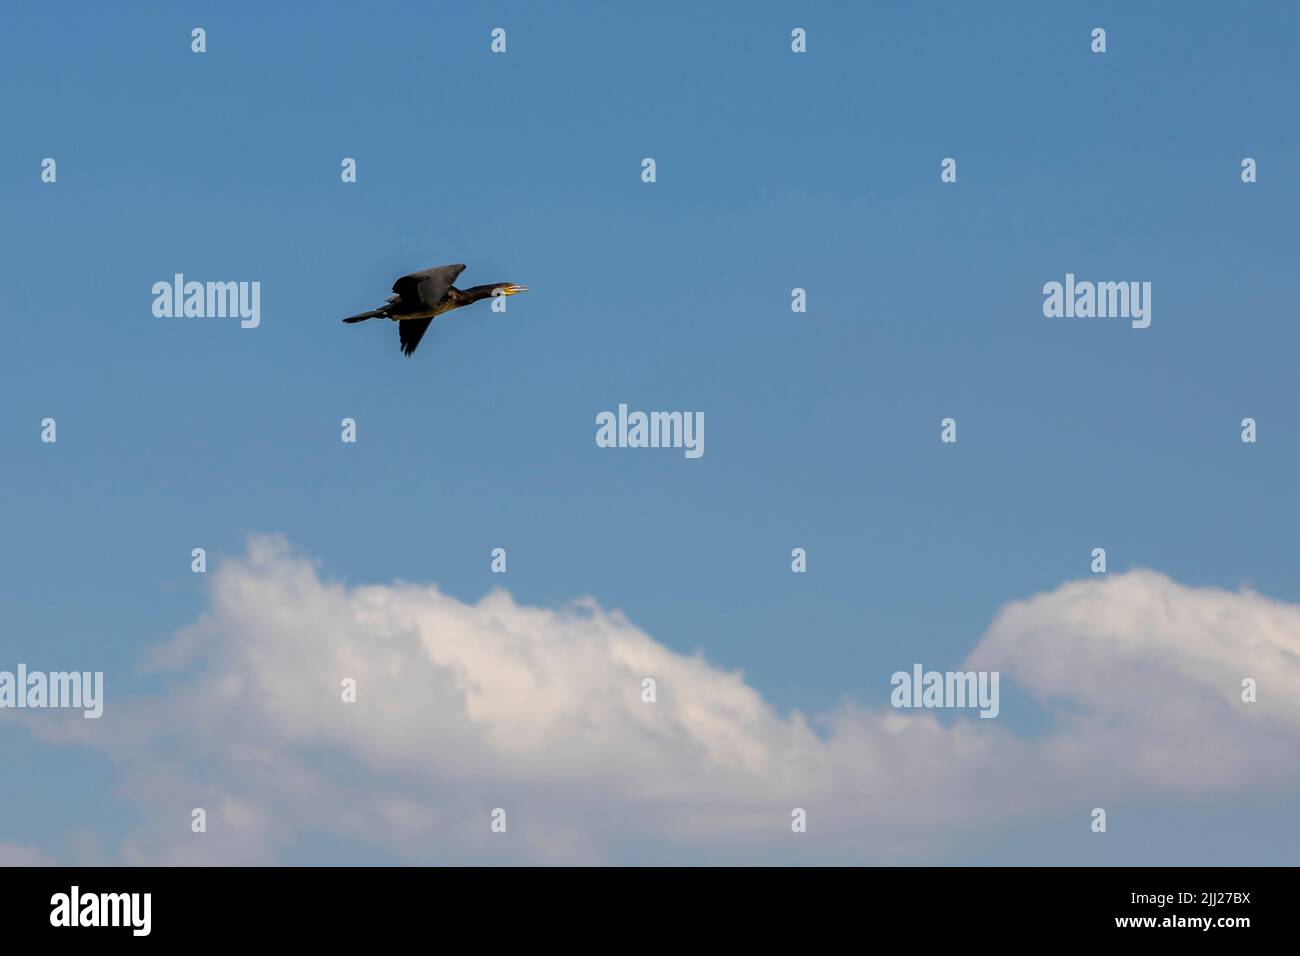 great cormorant flying at wild Stock Photo